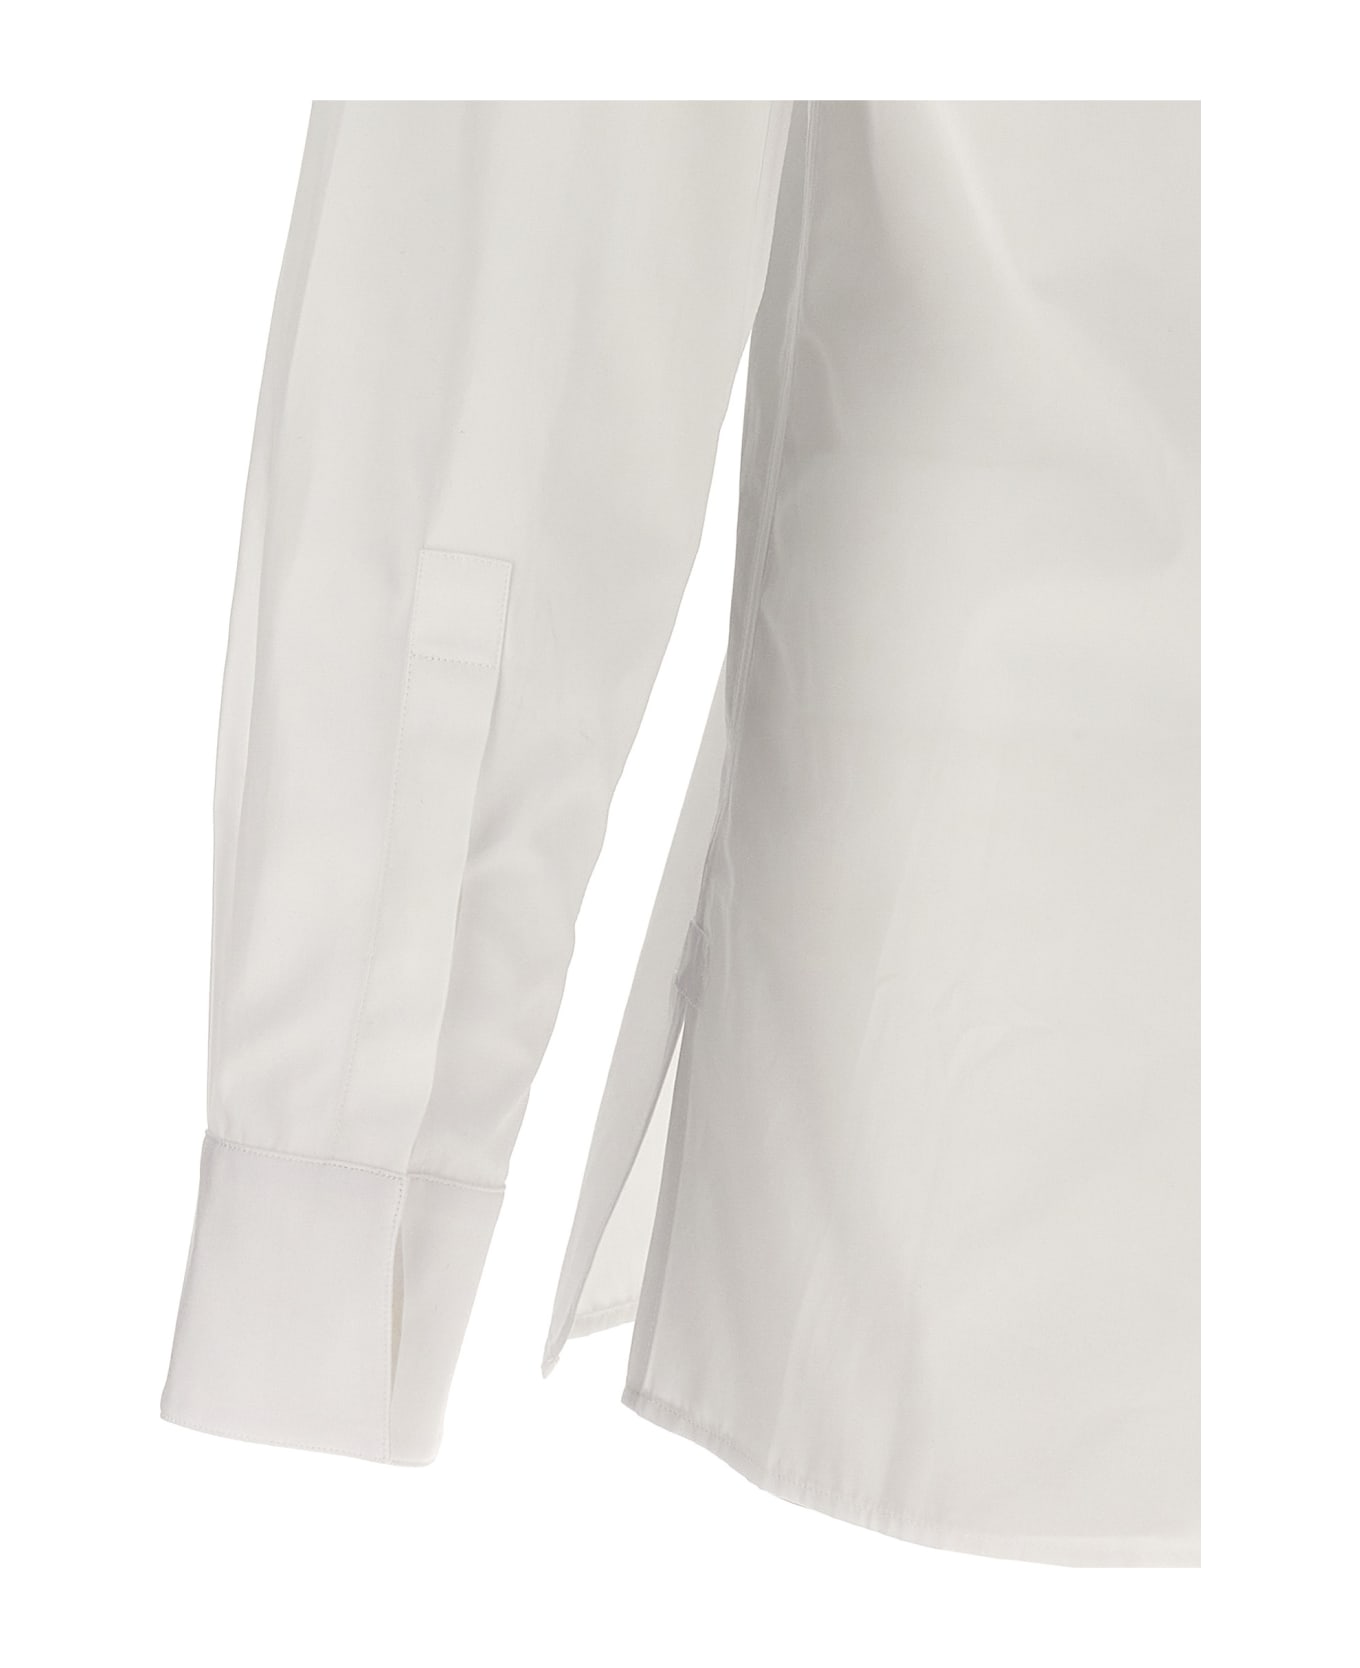 Givenchy Contemporary Cotton Shirt - White